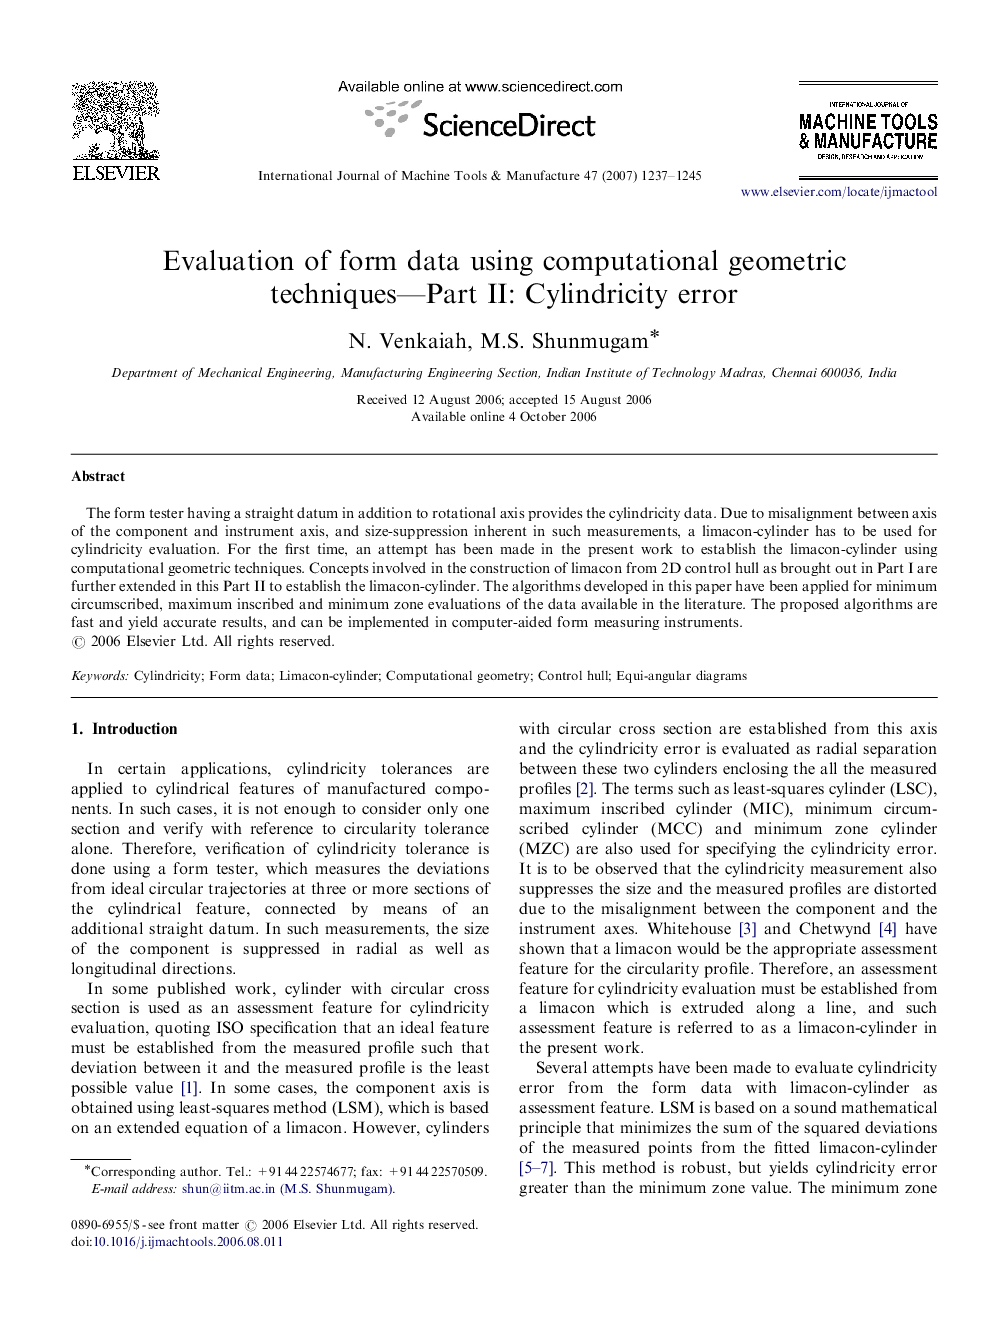 Evaluation of form data using computational geometric techniques—Part II: Cylindricity error